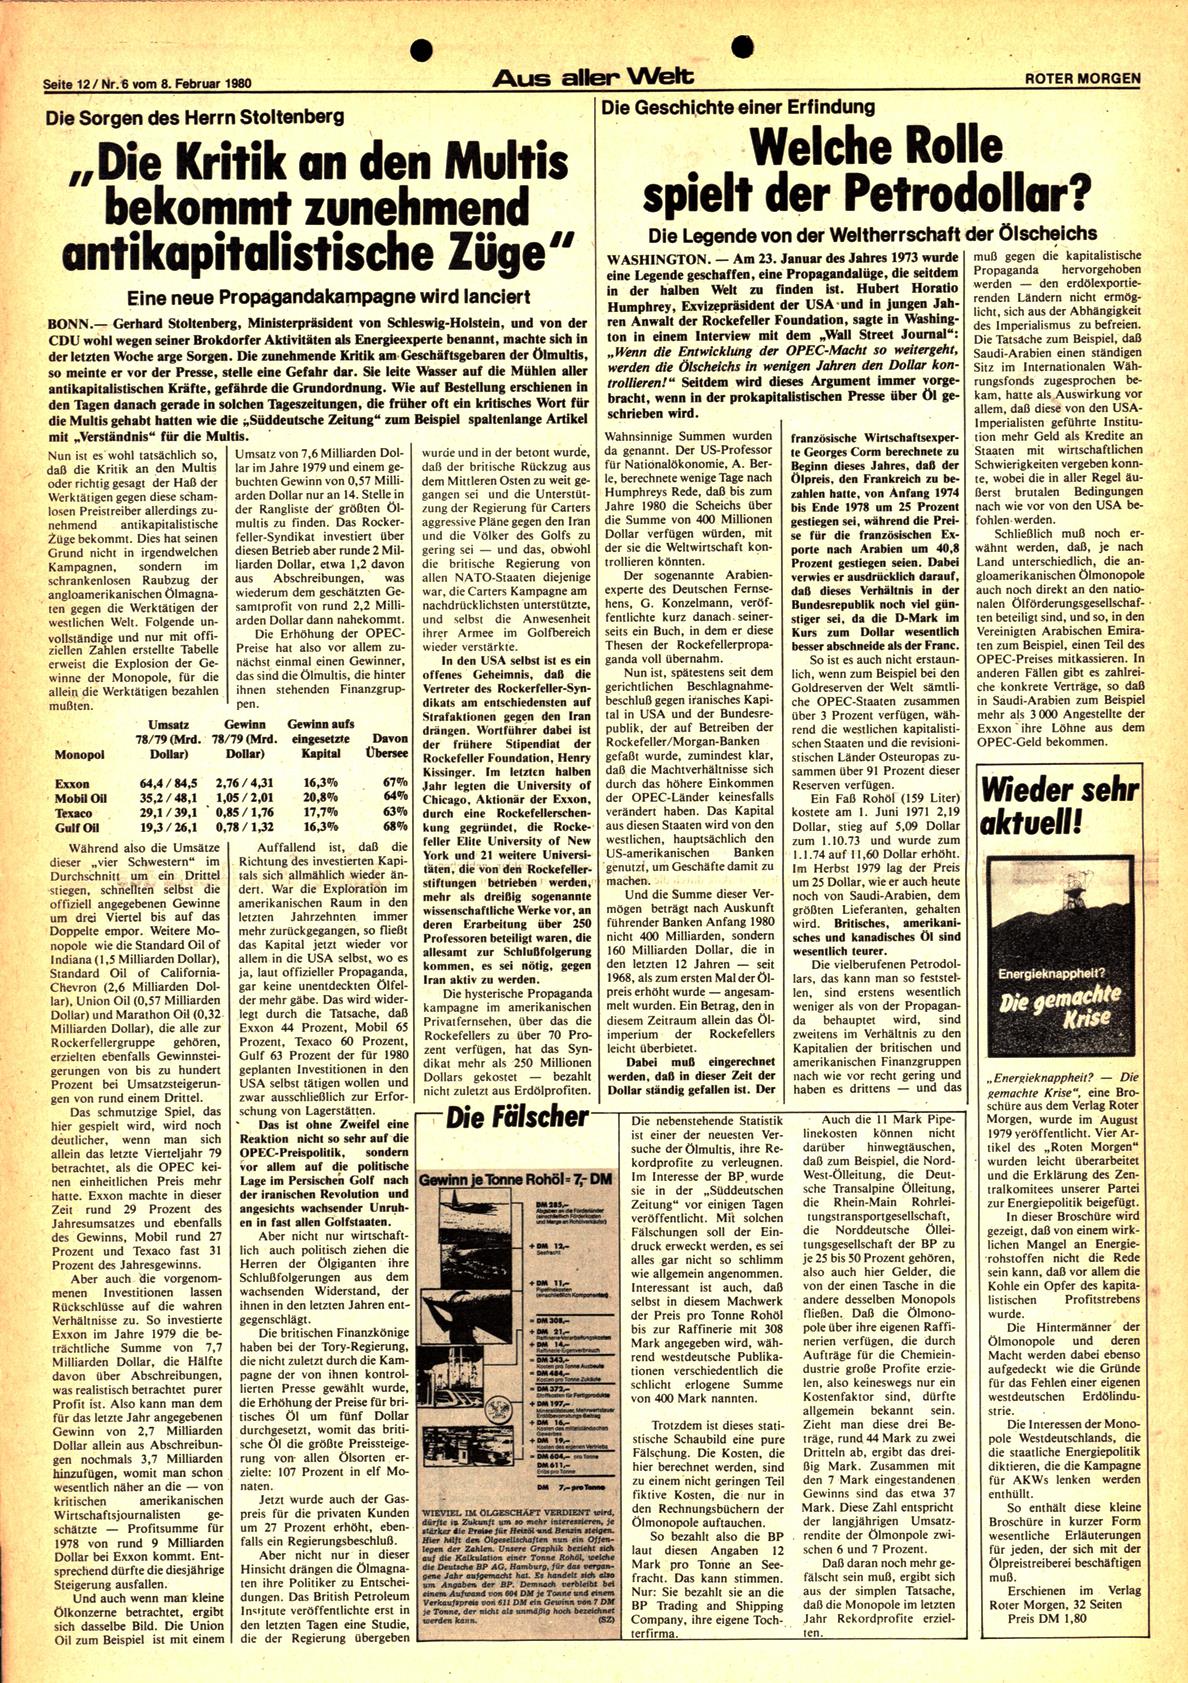 Roter Morgen, 14. Jg., 8. Februar 1980, Nr. 6, Seite 12